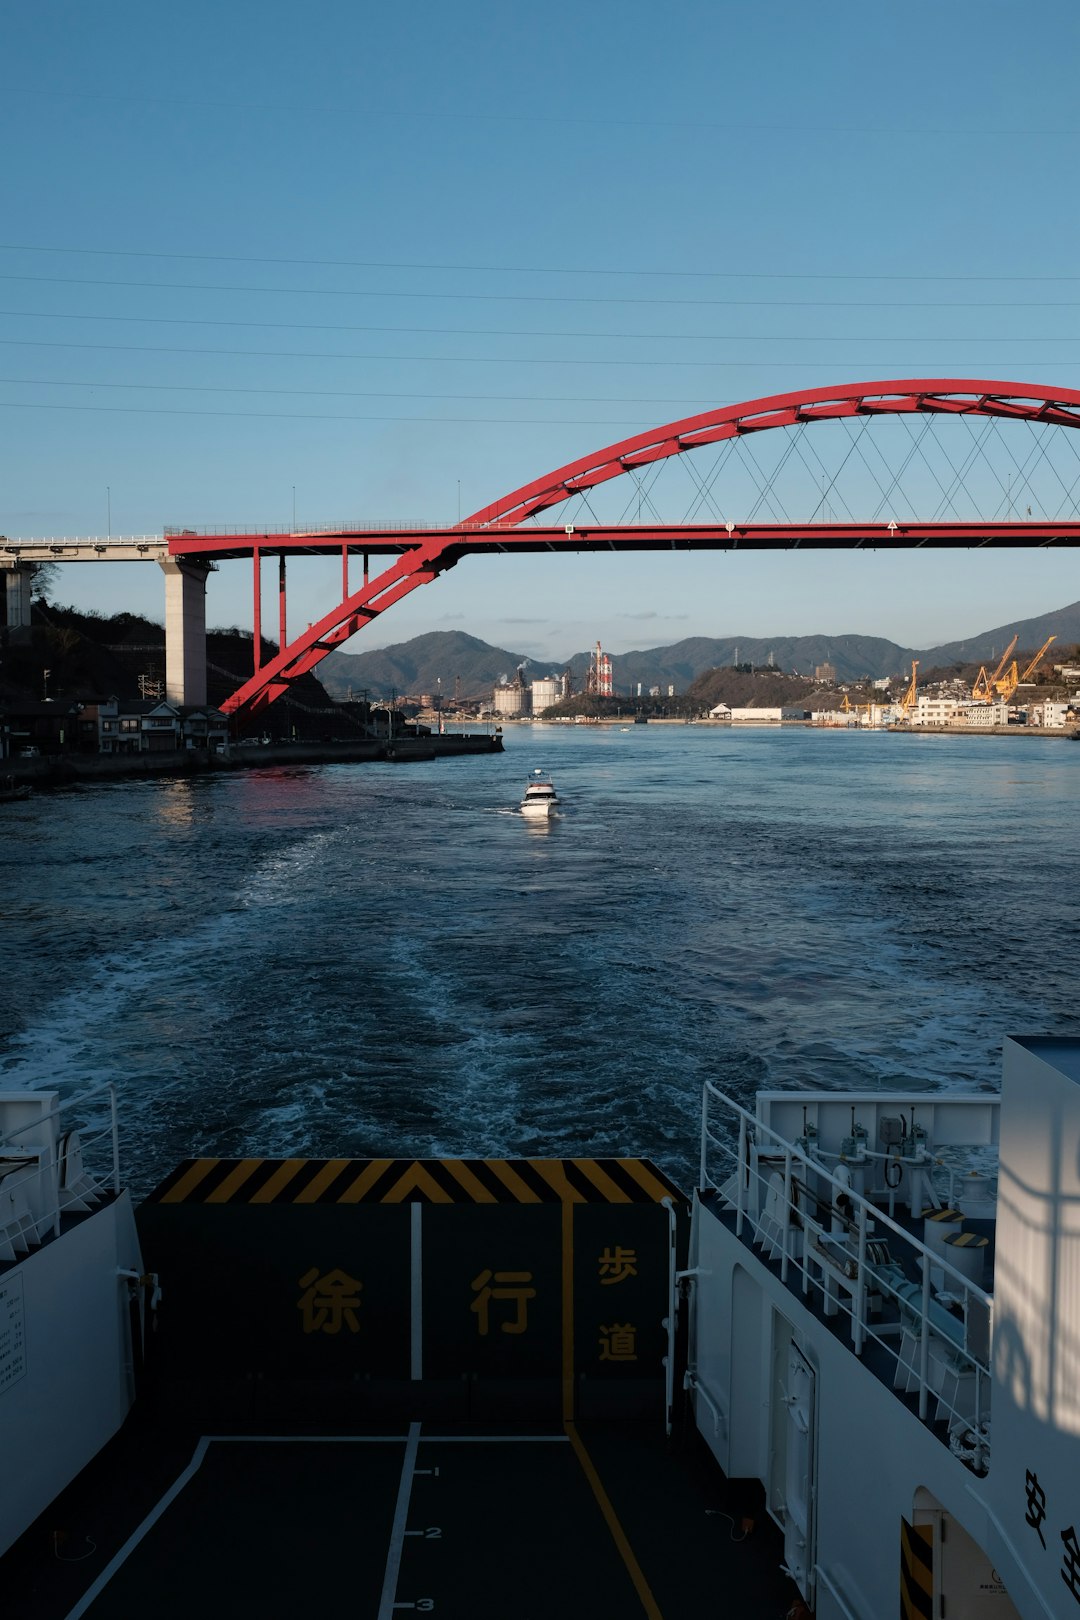 white ship on water near red suspension bridge